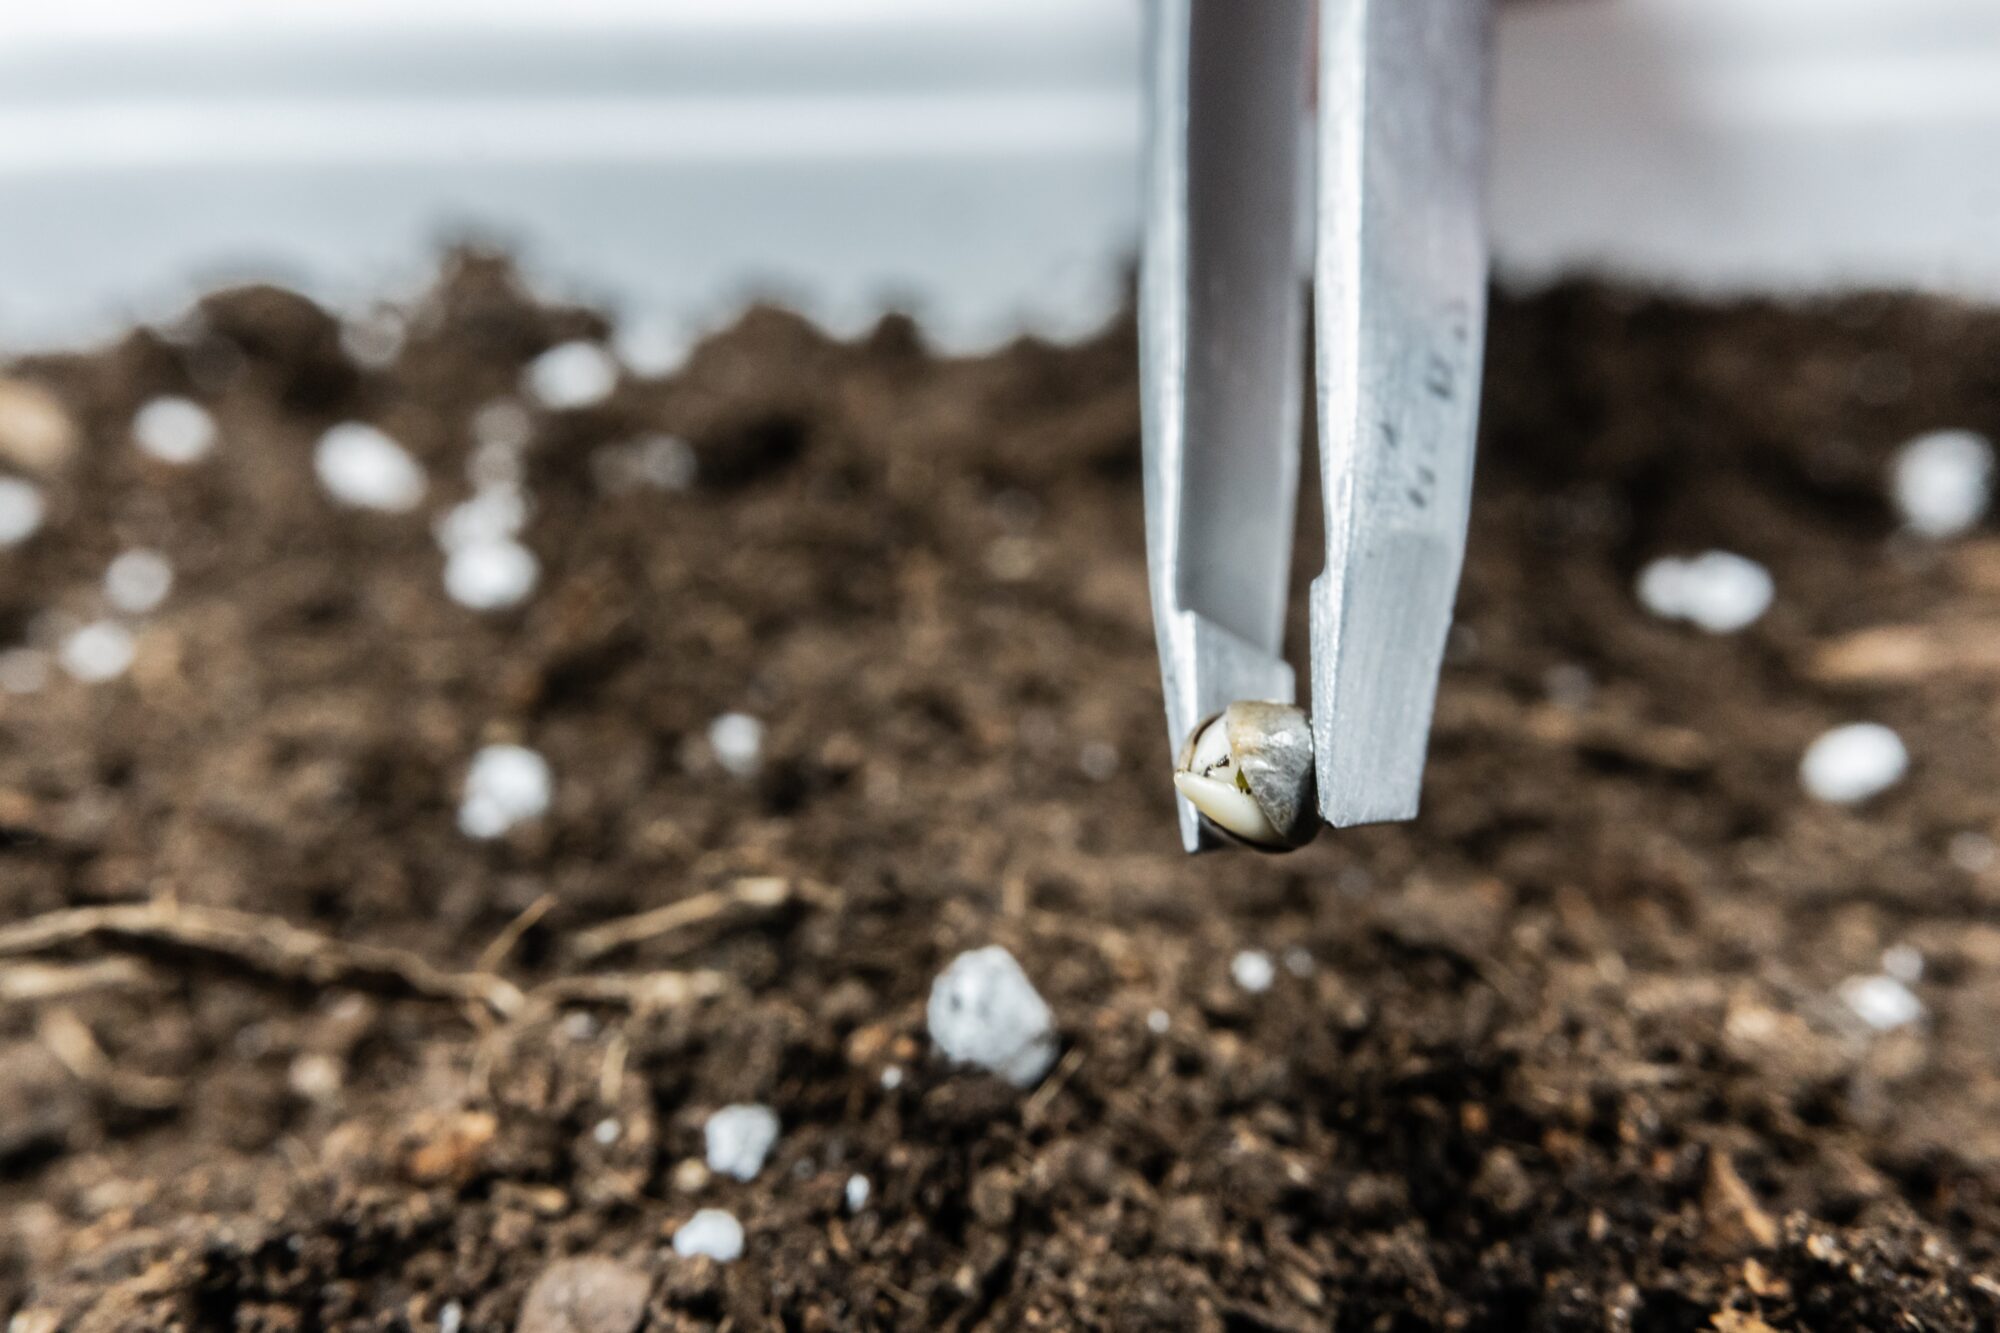 Planting a Marijuana Seed